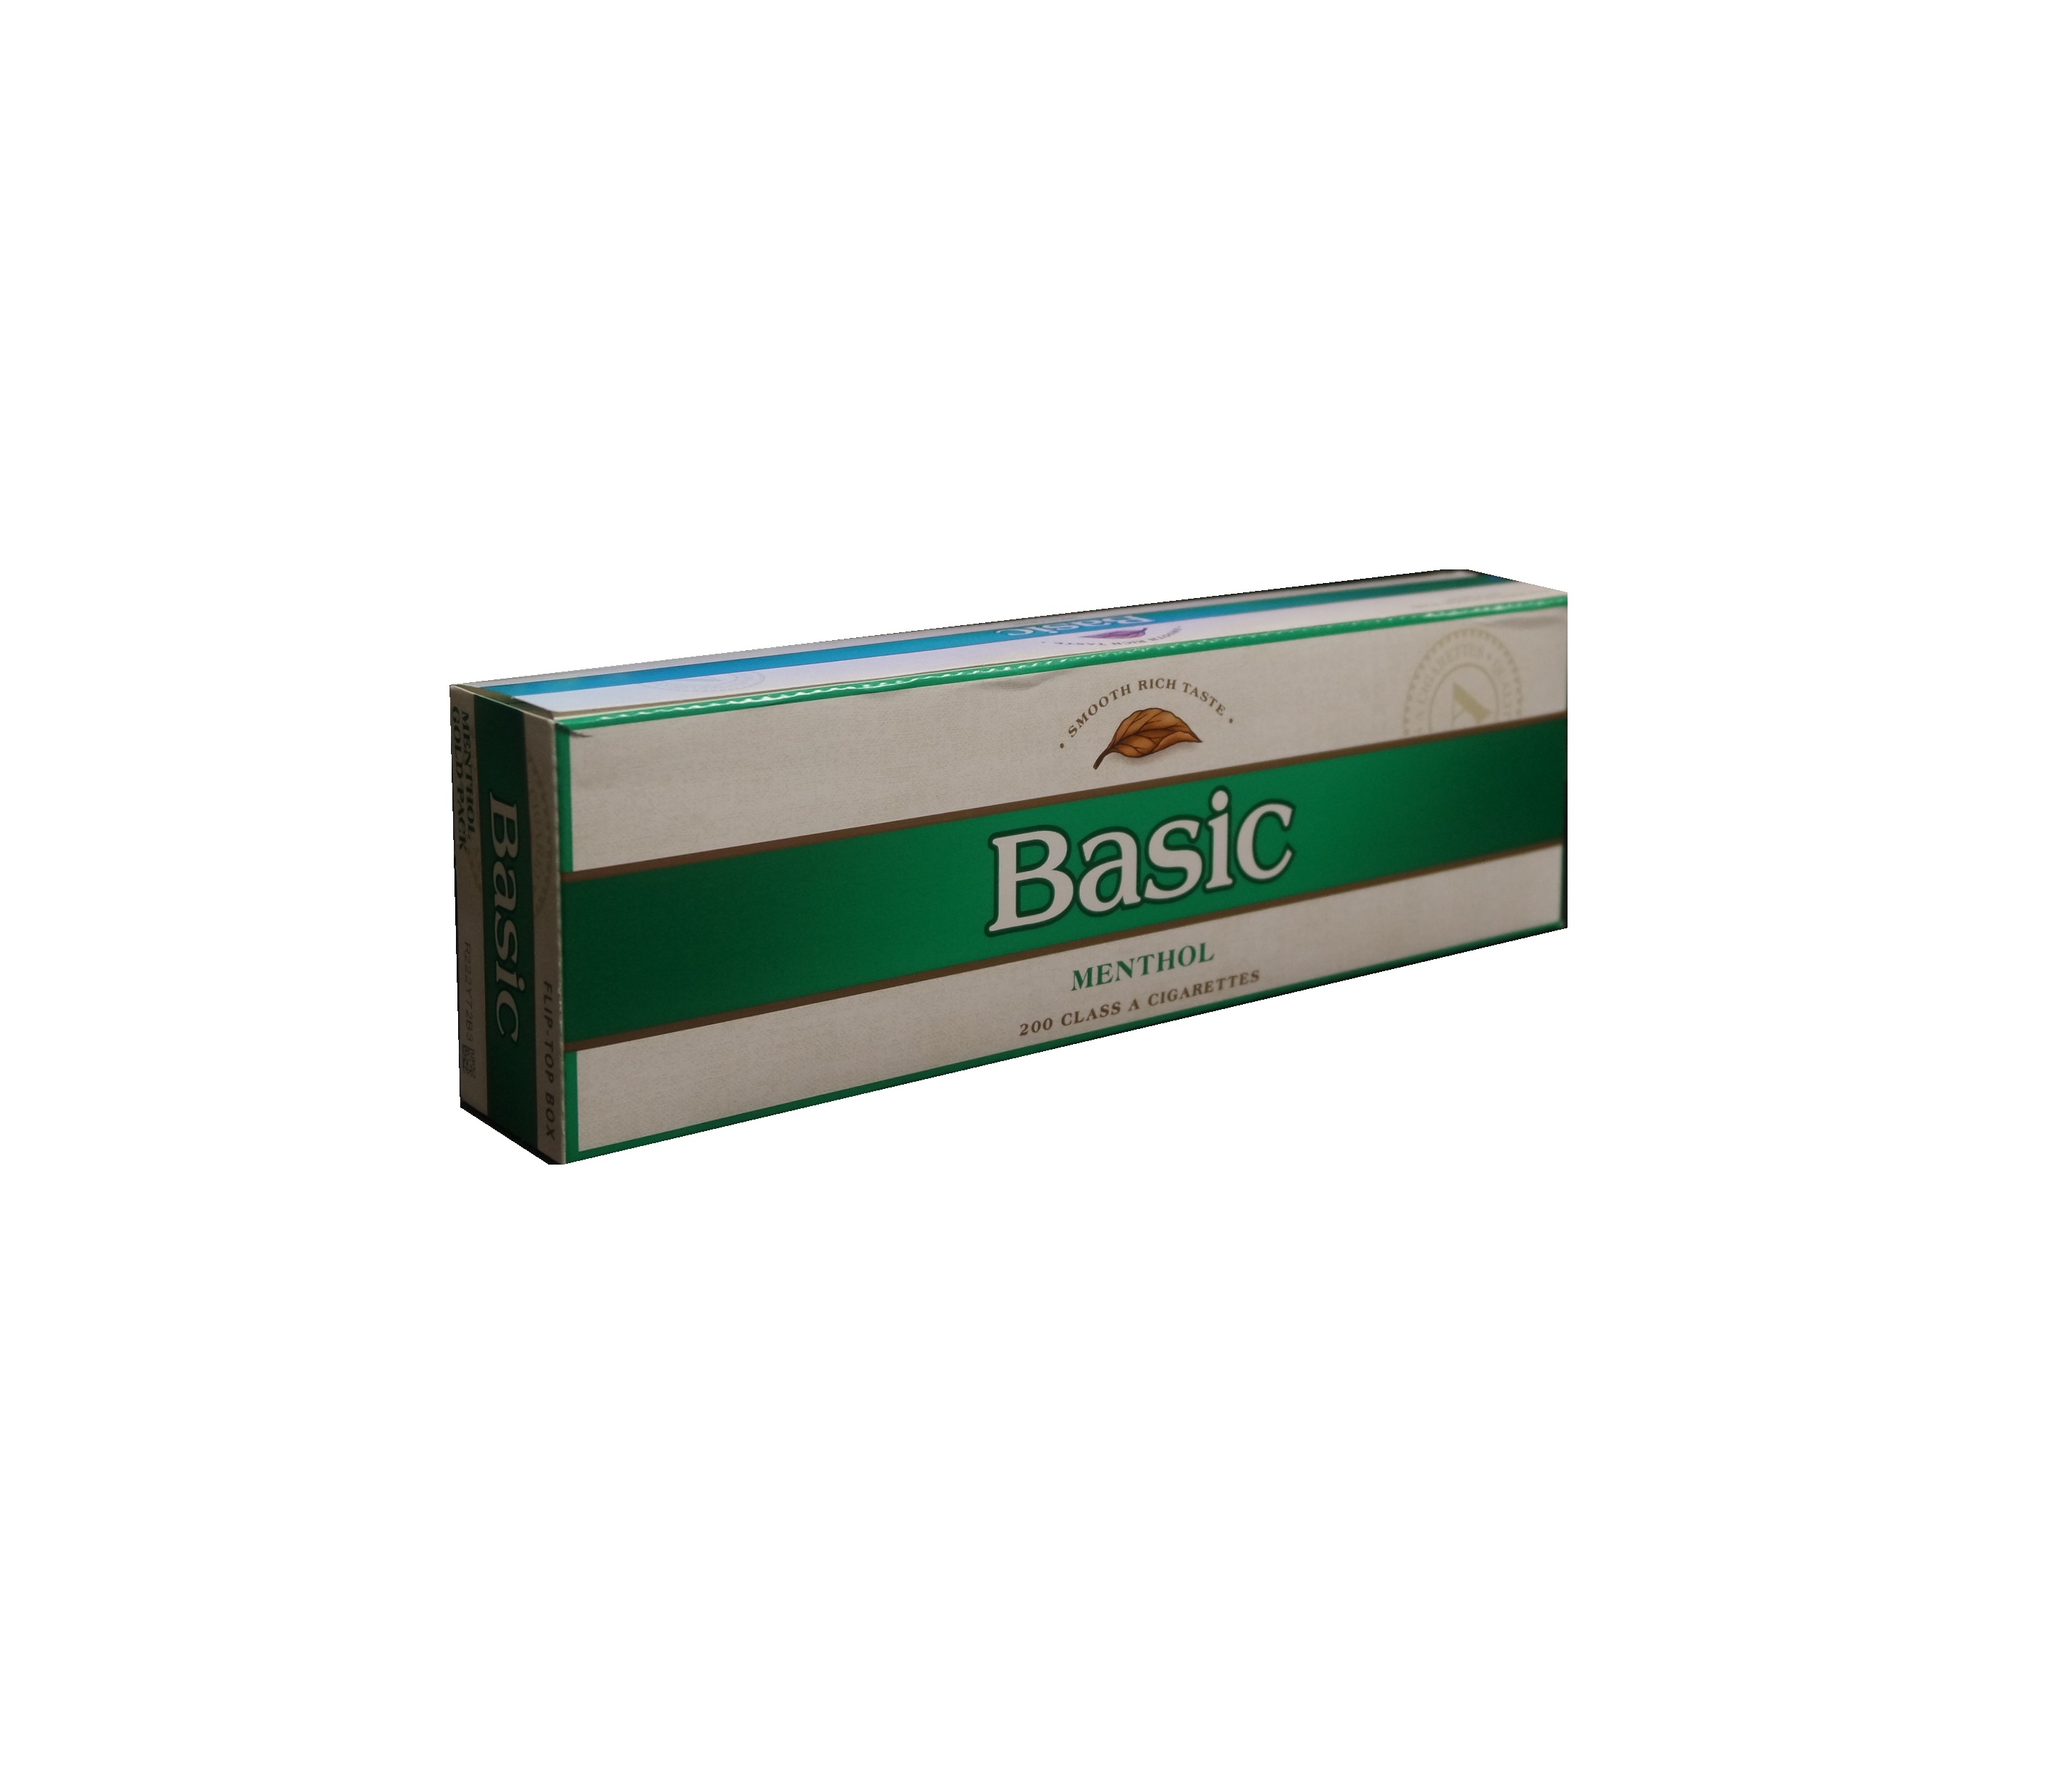 Basic menthol gold box